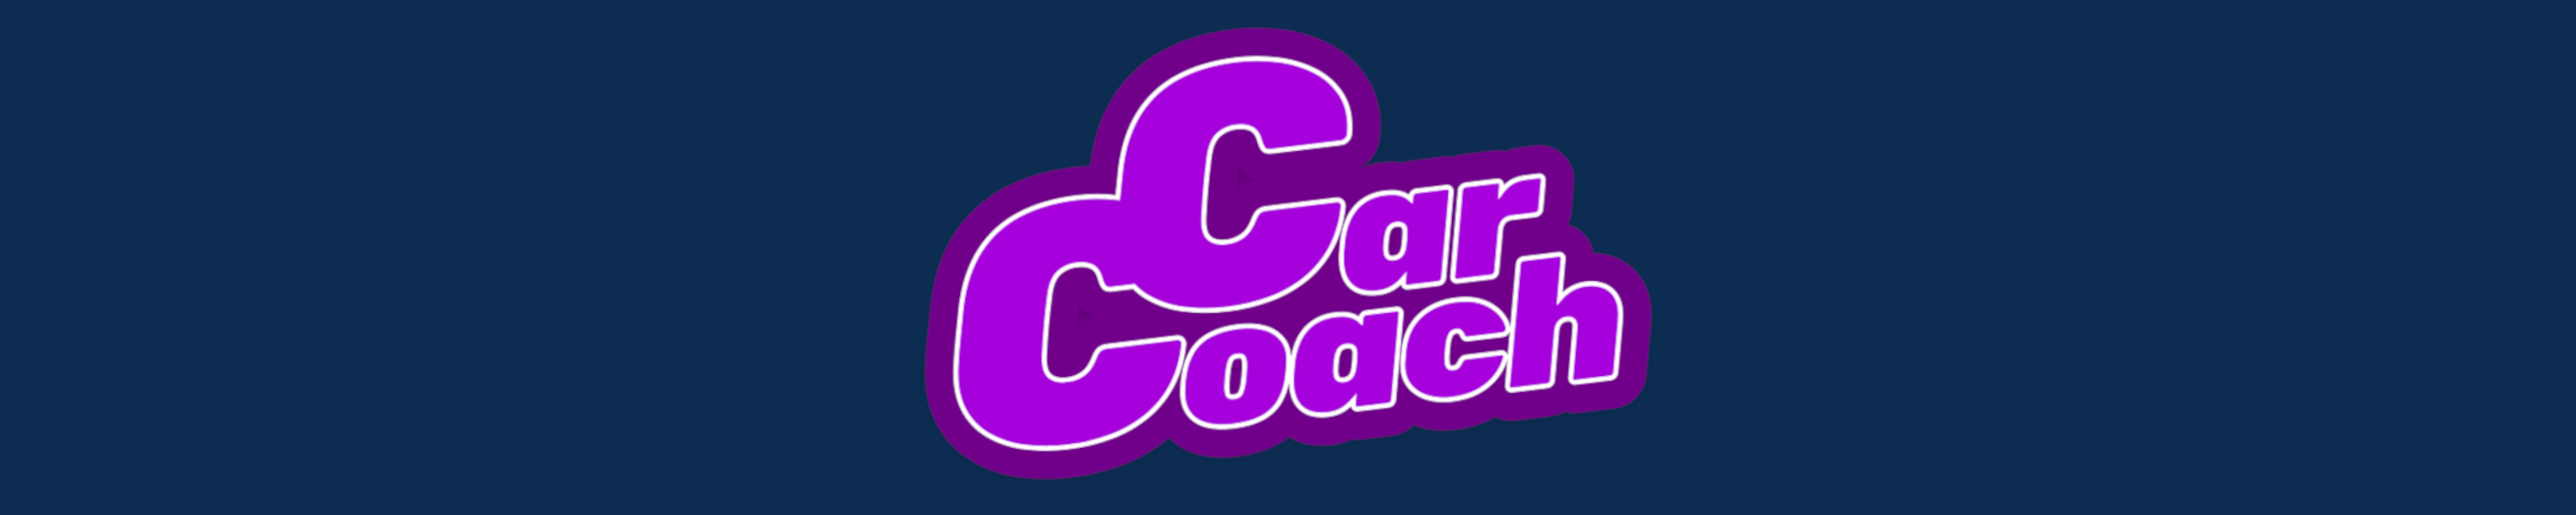 car-coach-logo